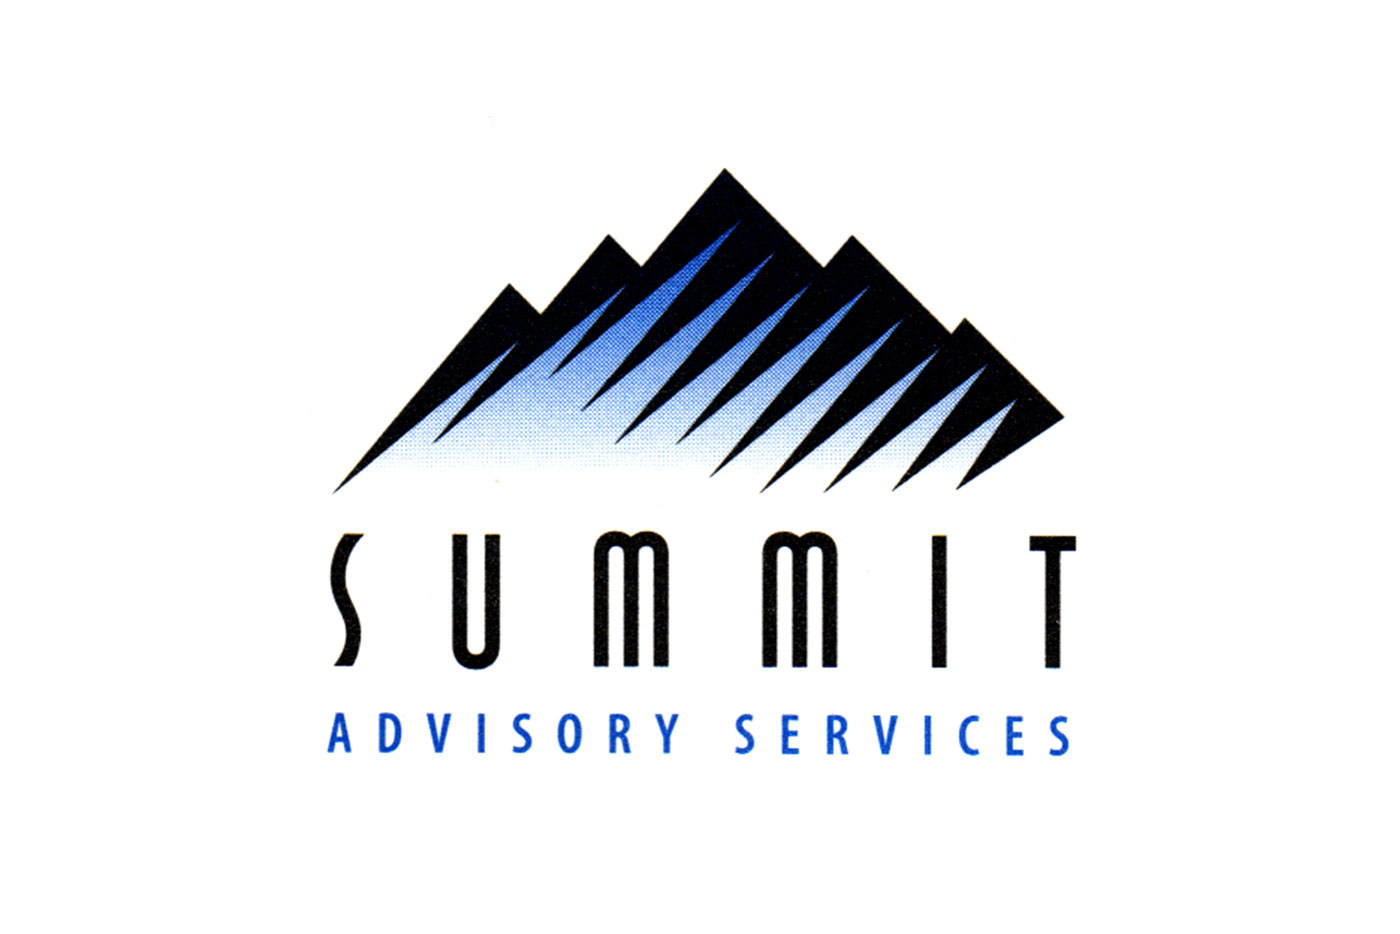 Summit Advisory Services